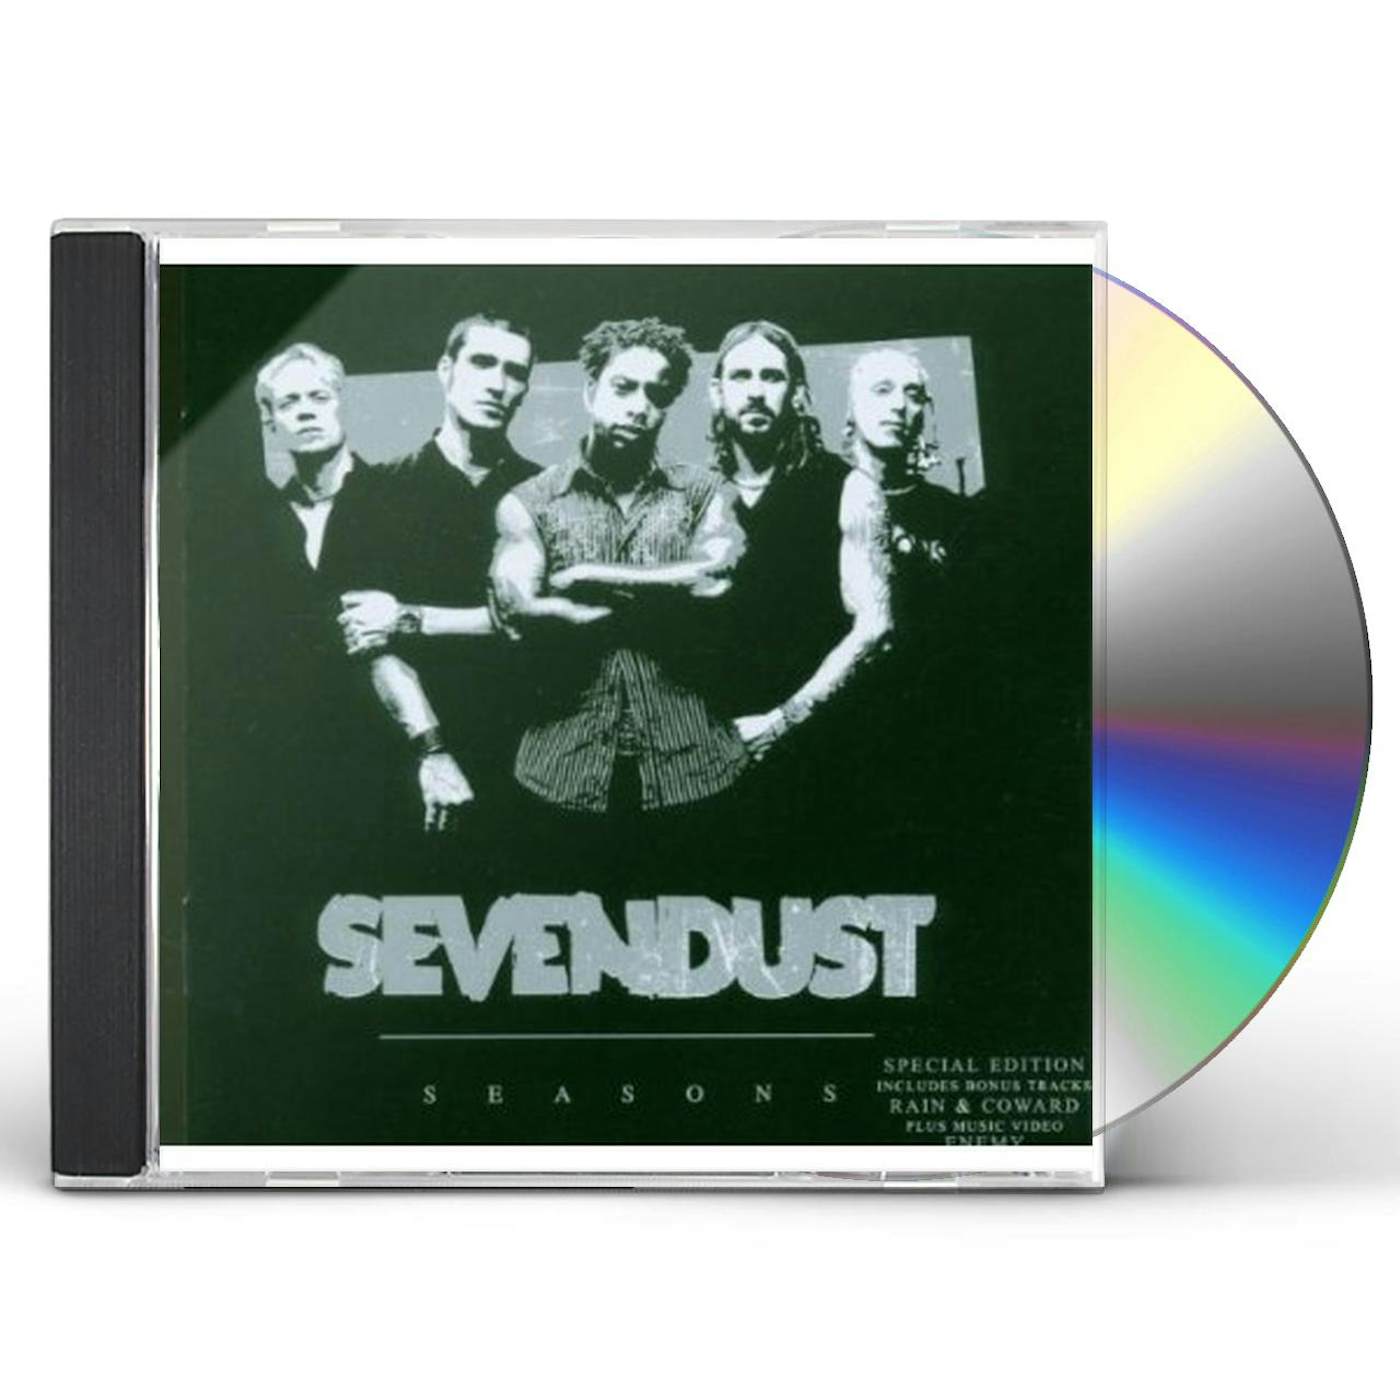 Sevendust SEASONS CD